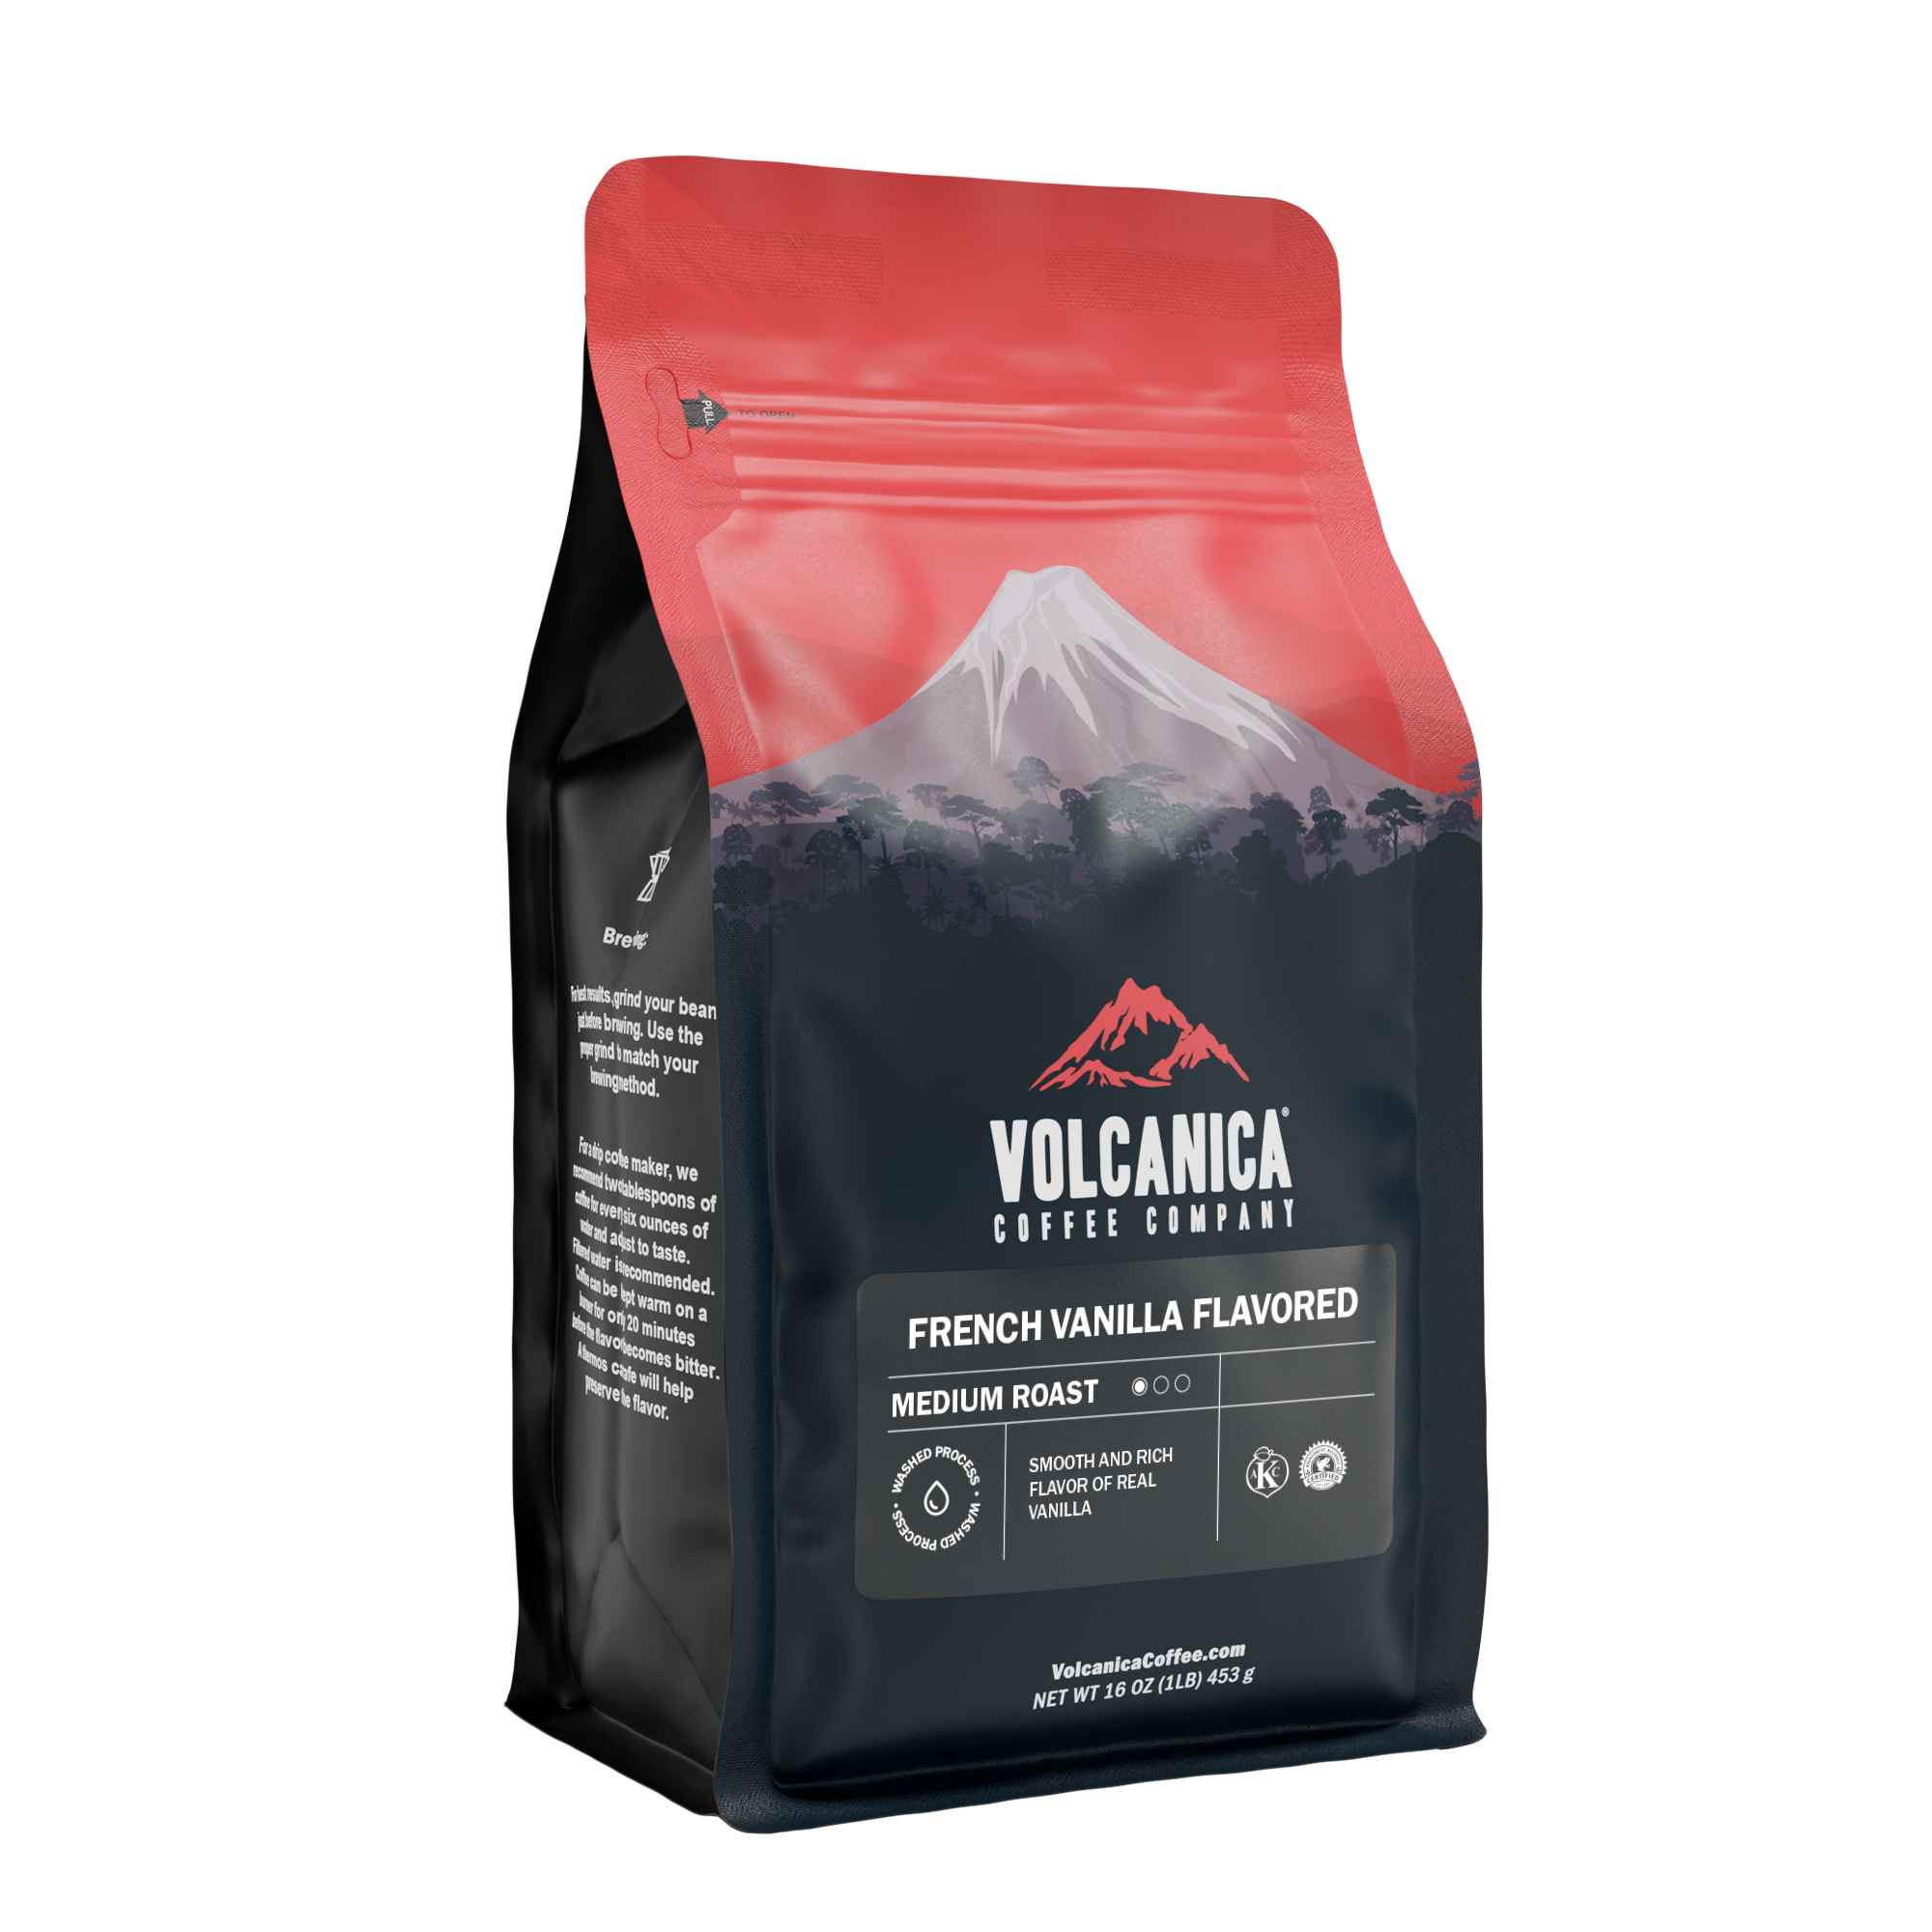 French Vanilla Flavored Coffee - French Vanilla Coffee - Volcanica Coffee